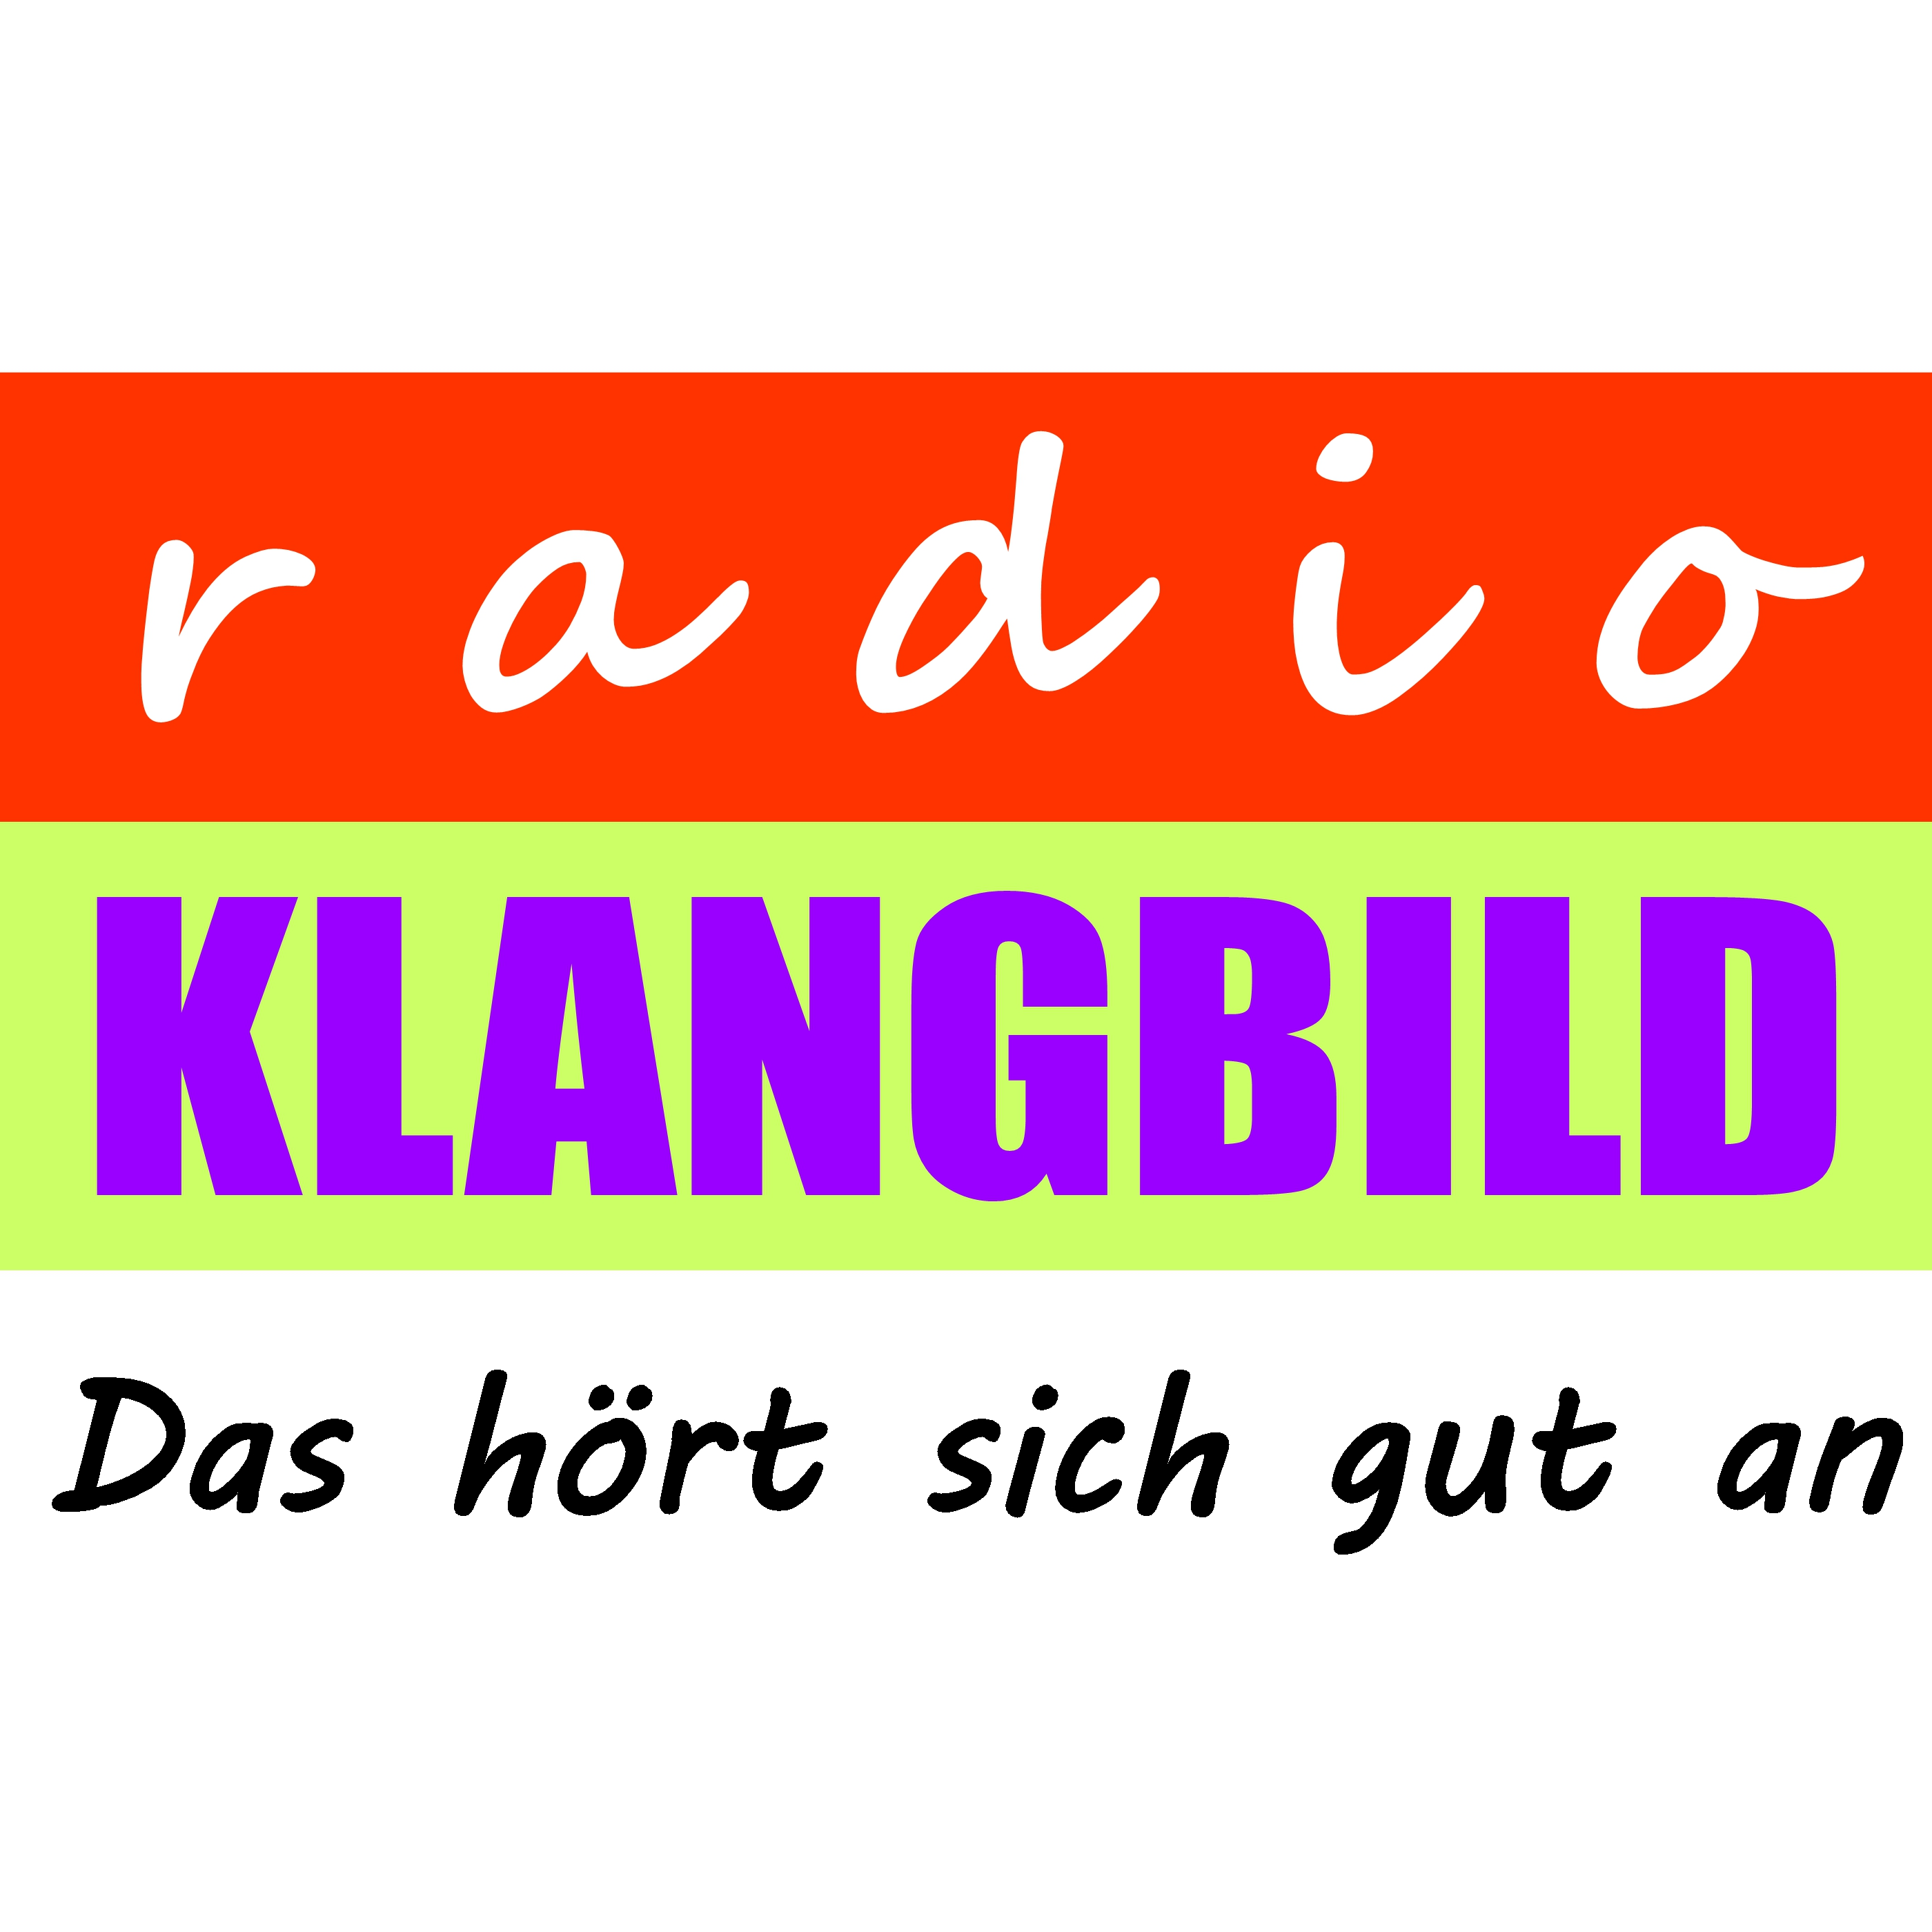 Radio Klangbild